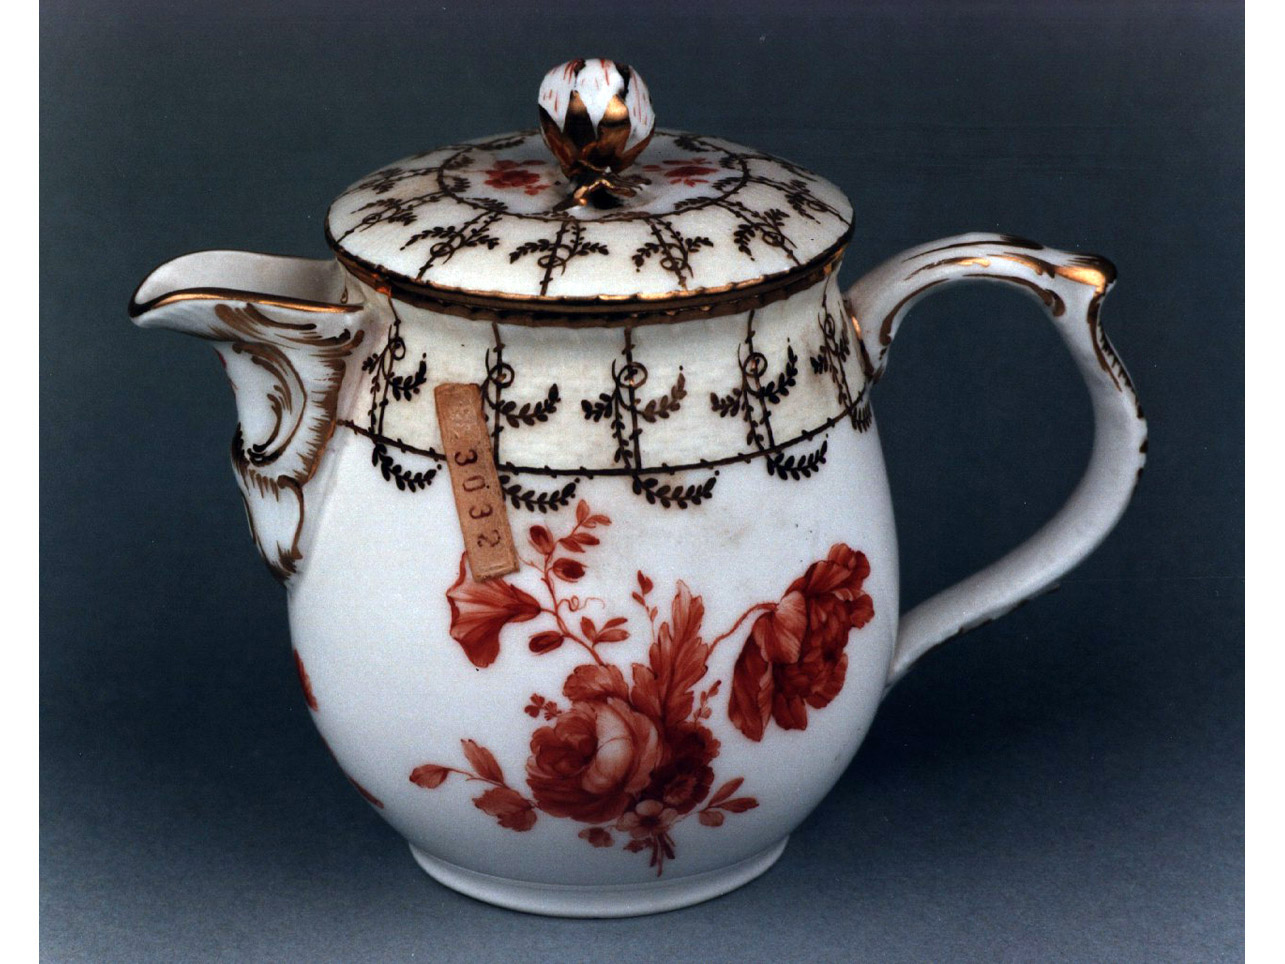 motivi decorativi floreali (servizio da caffè, insieme) - manifattura tedesca (sec. XVIII)